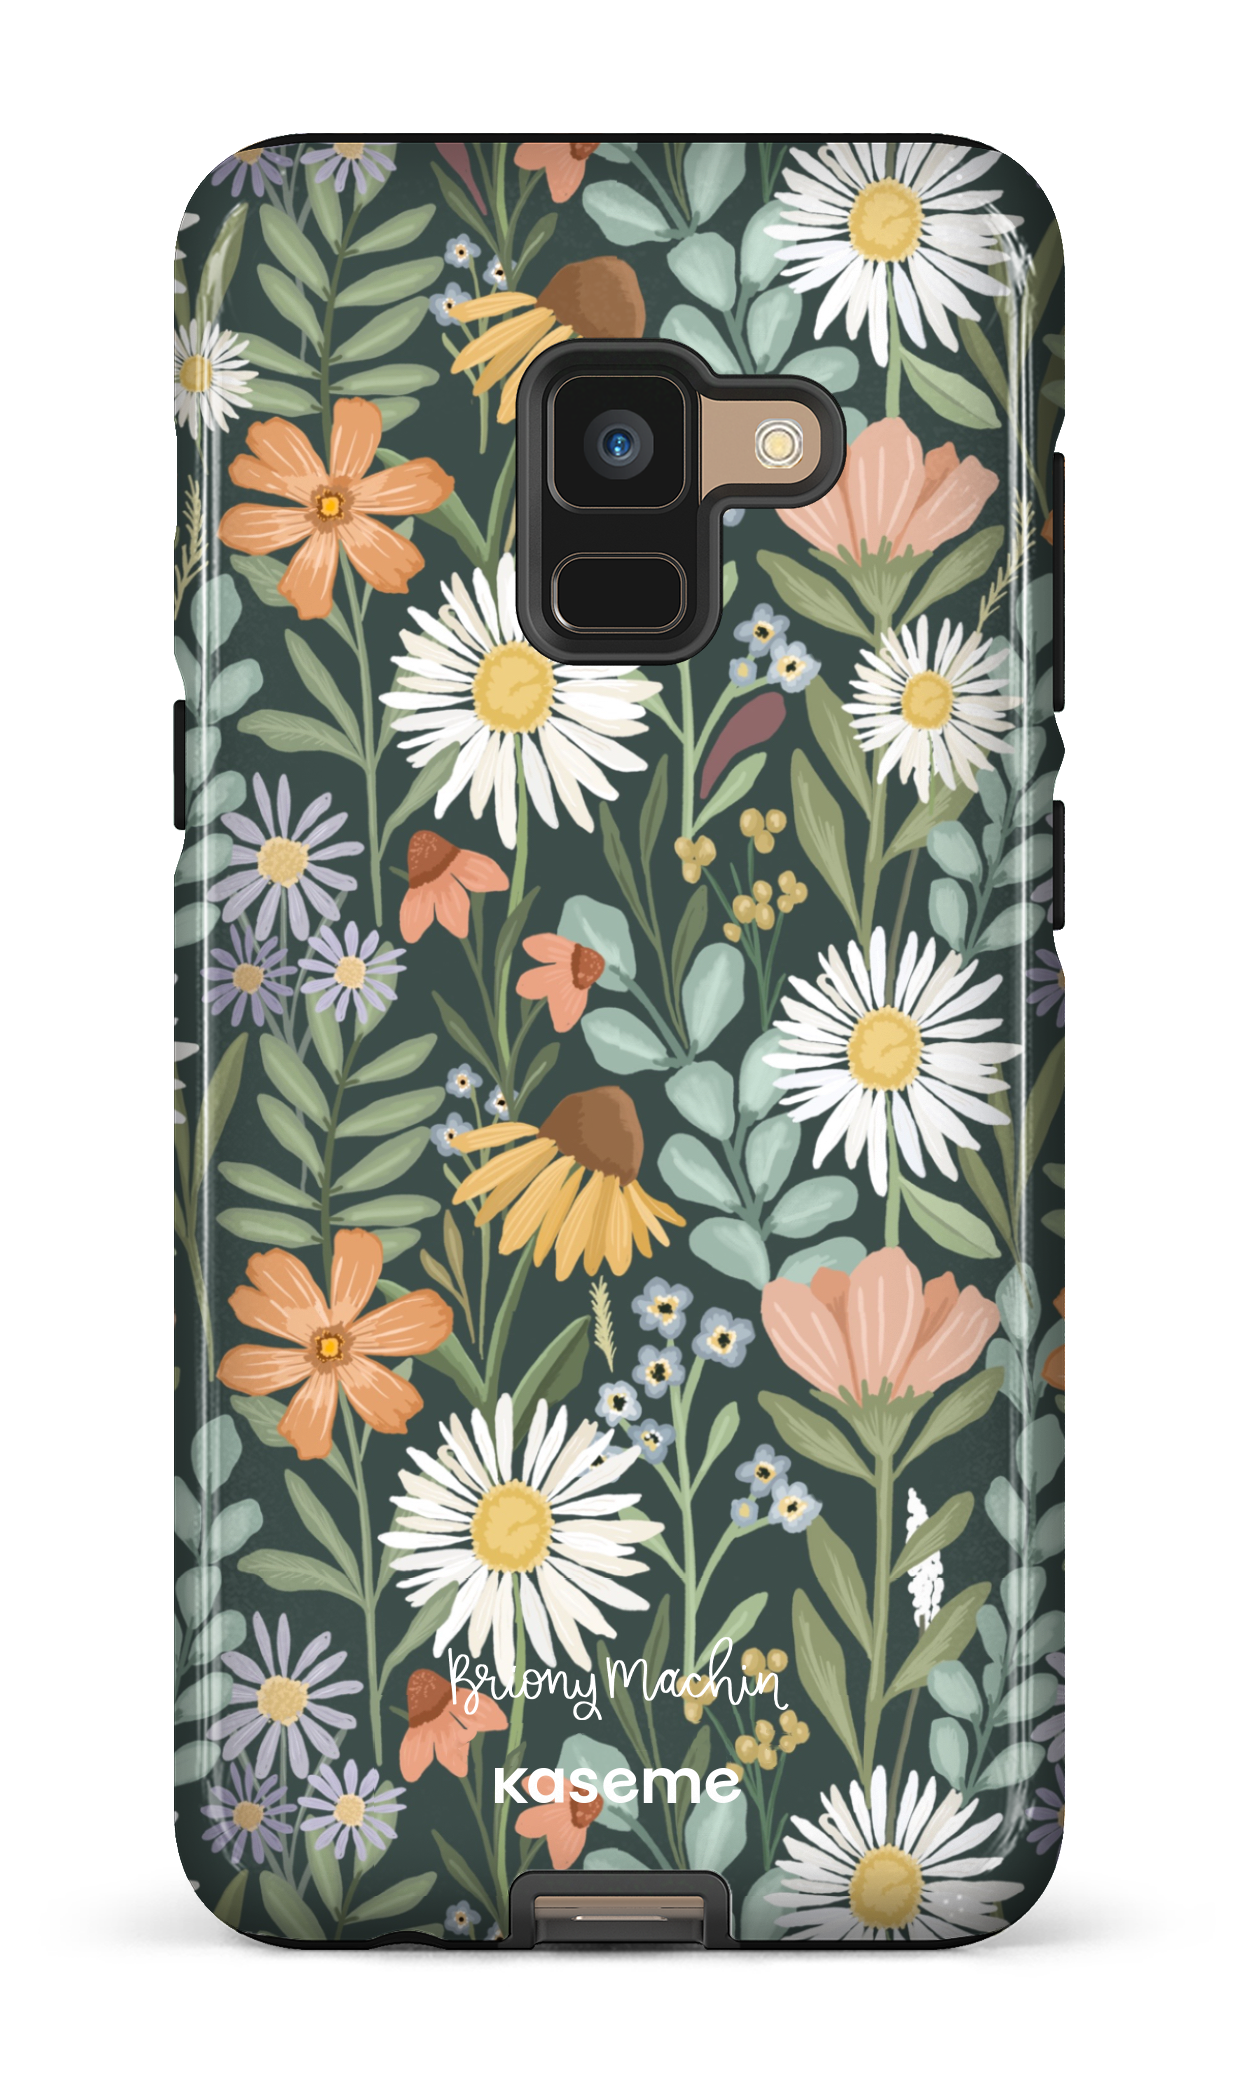 Sending Flowers Green by Briony Machin - Galaxy A8